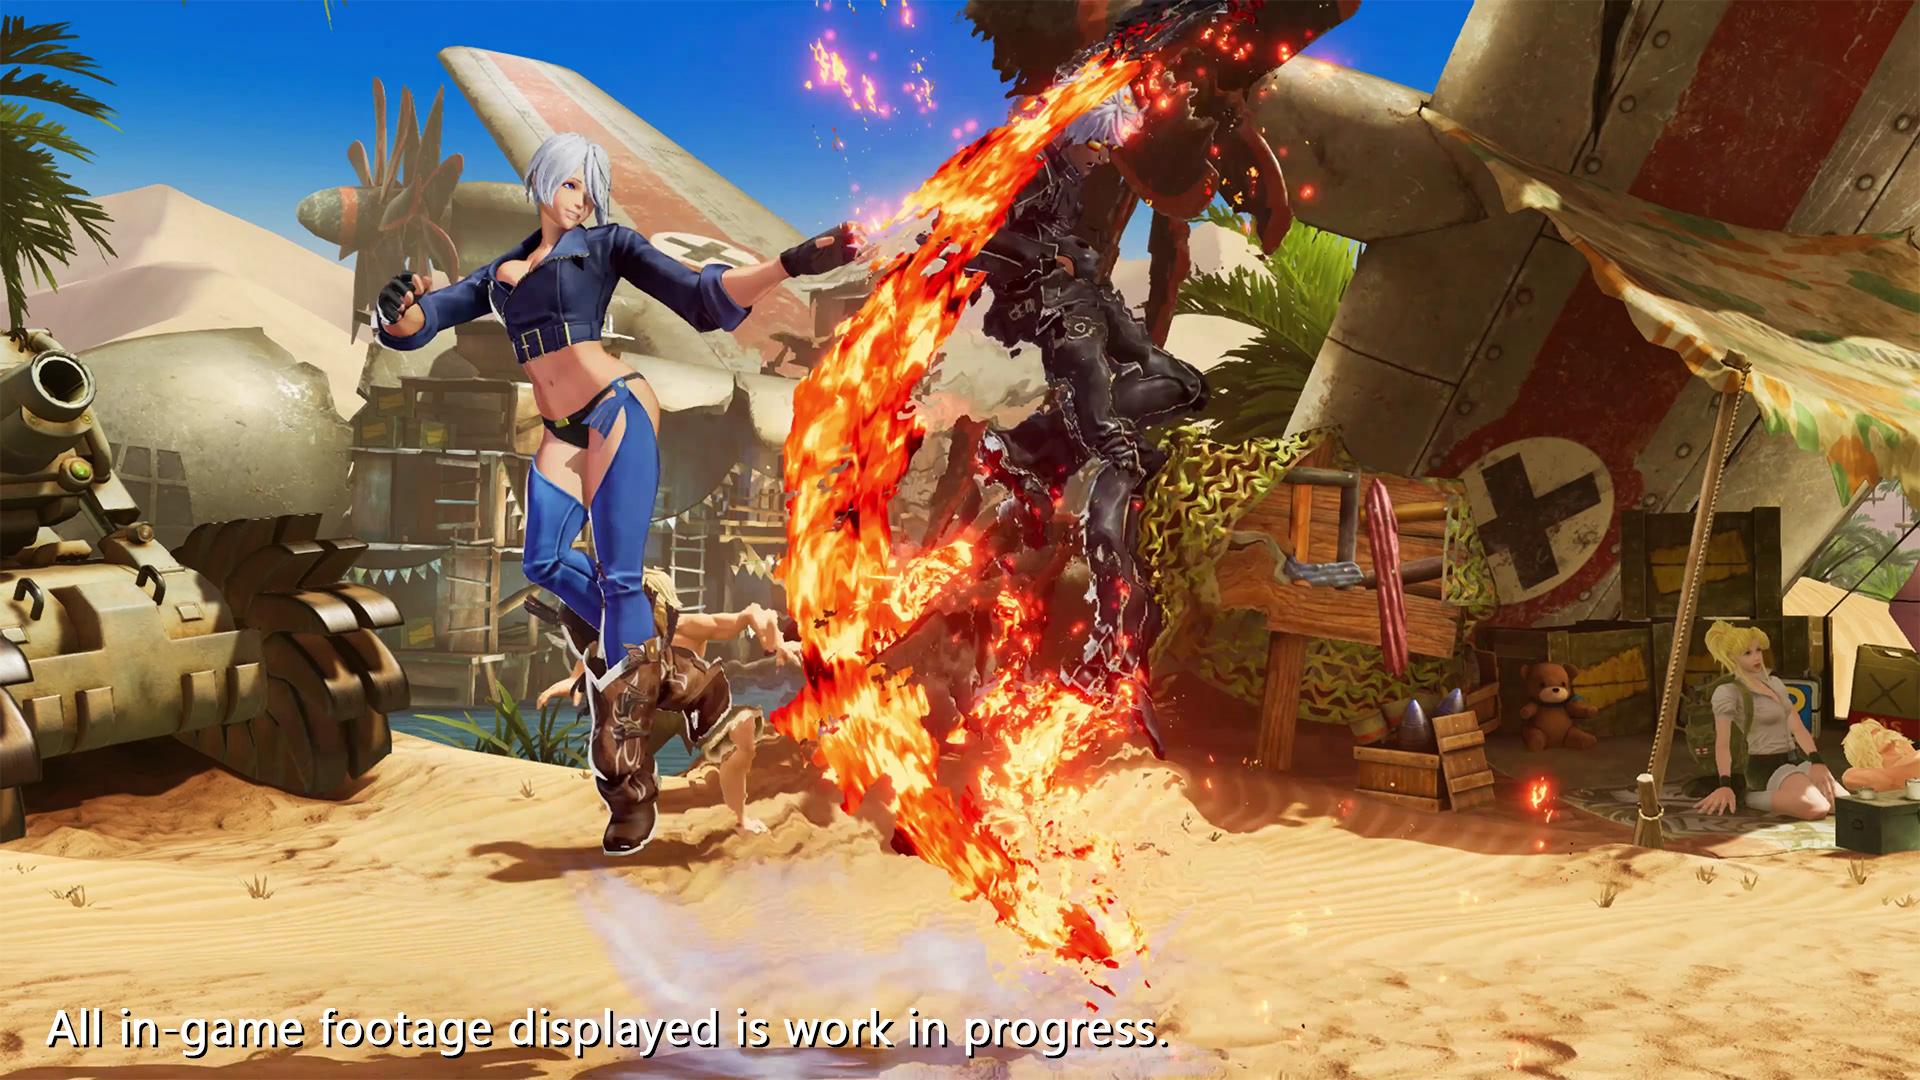 The King of Fighters XV: gameplay e 7 lutadores que a gente recomenda